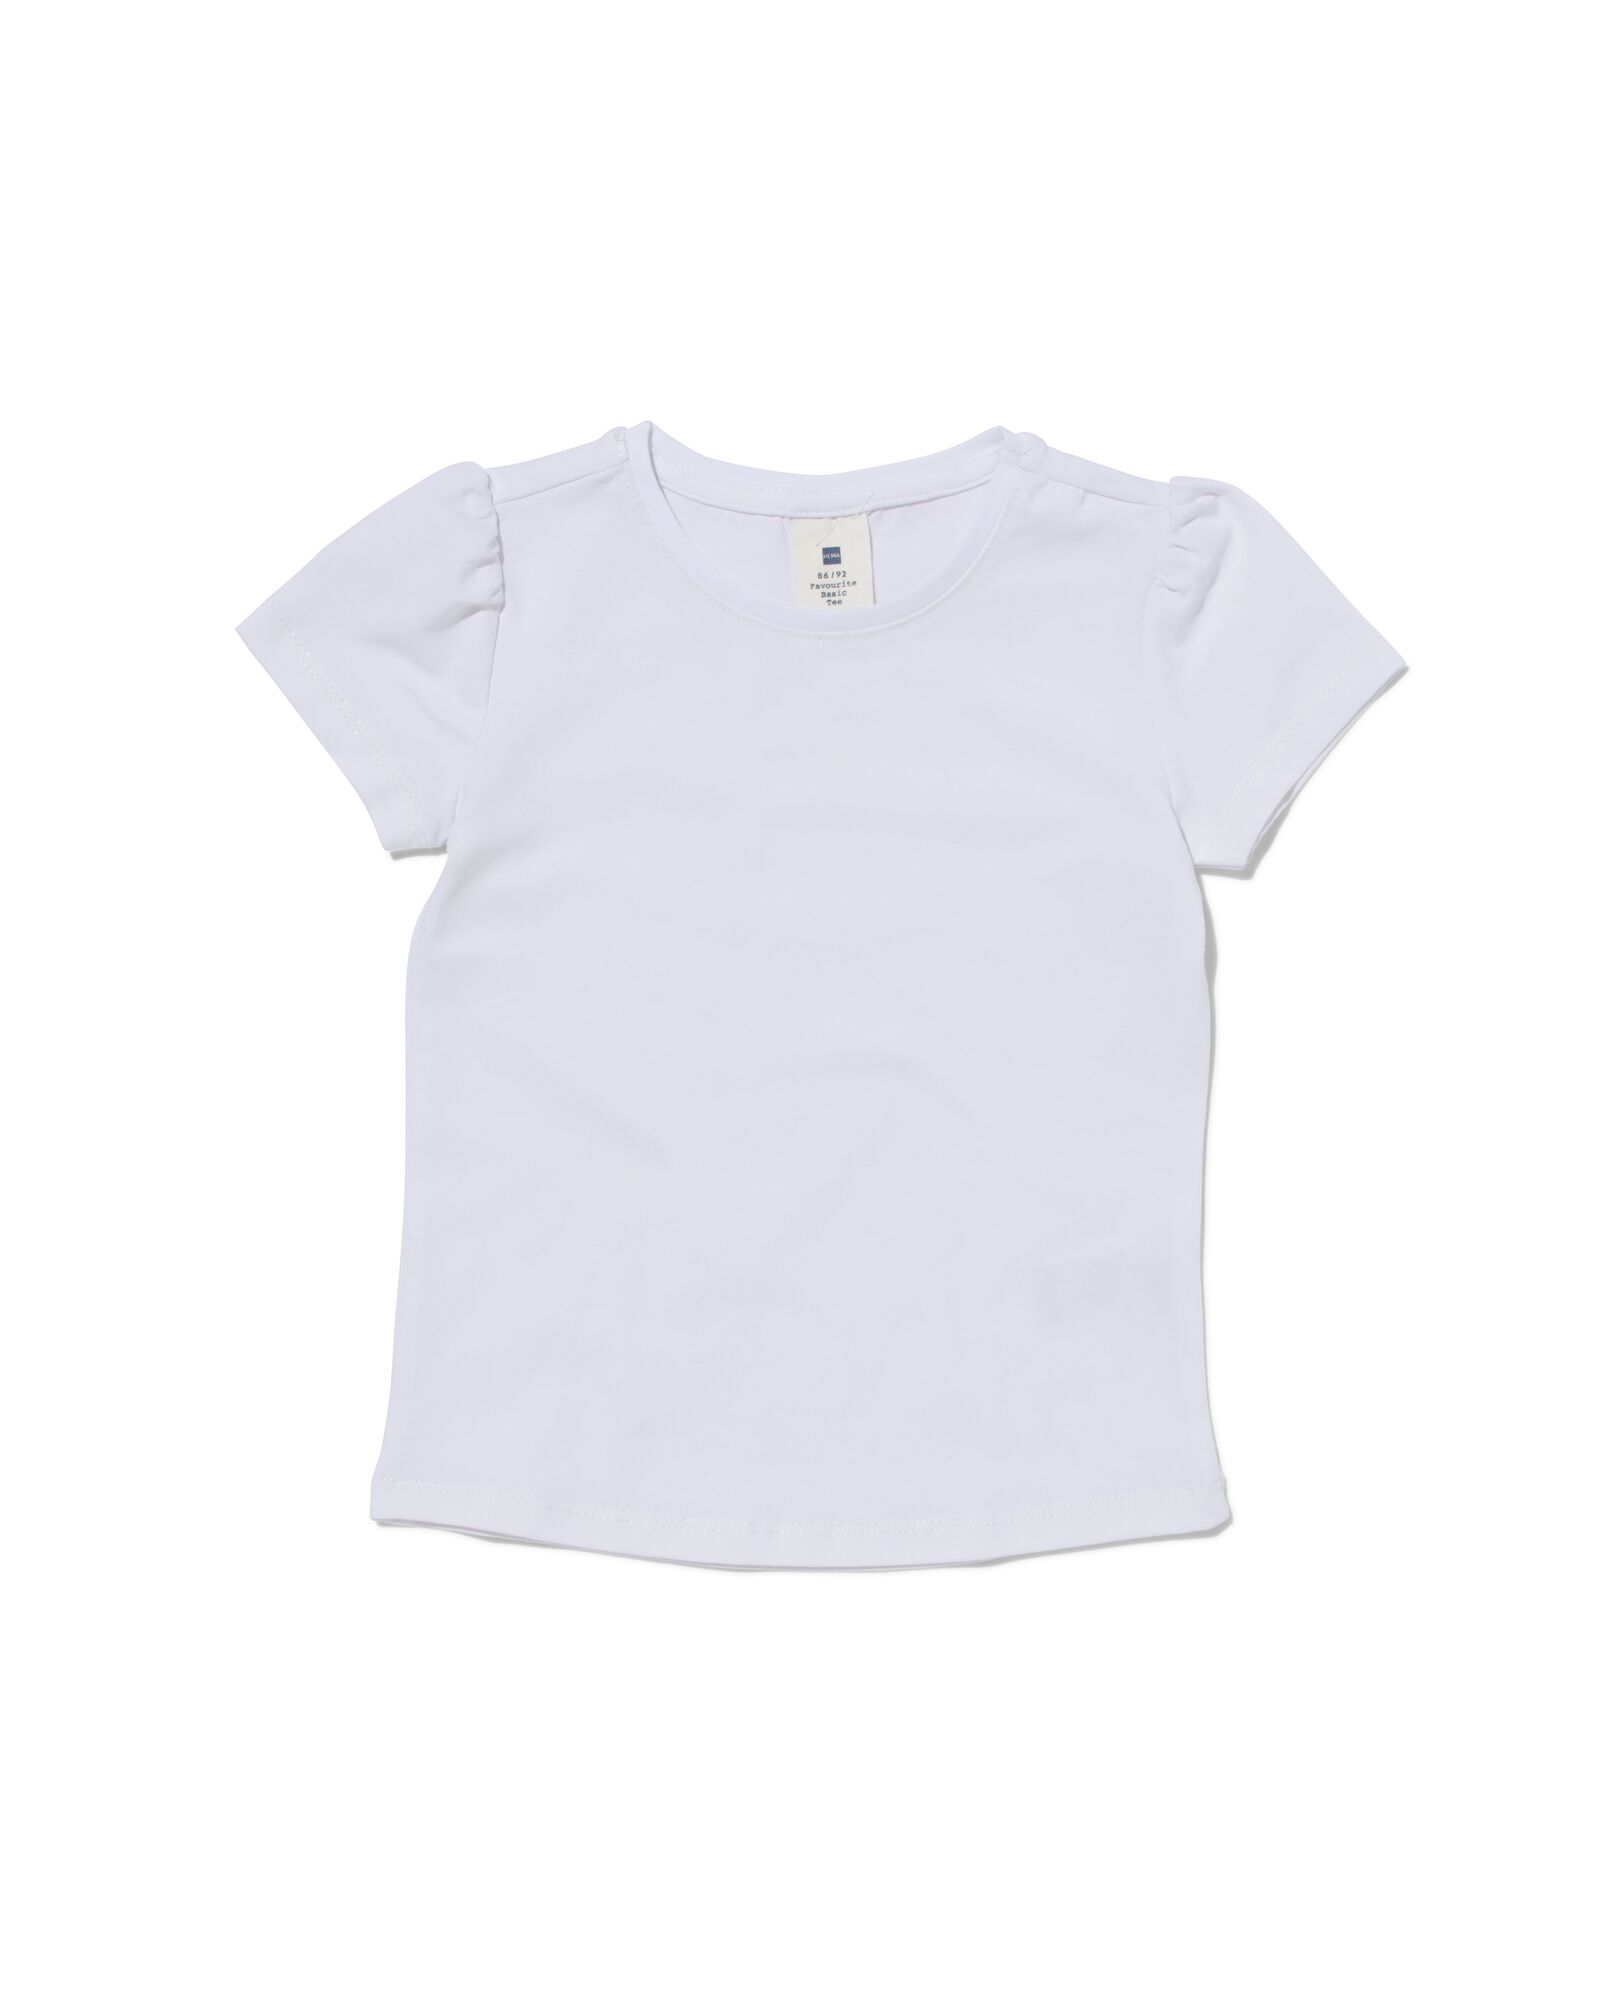 2er-Pack Kinder-T-Shirts weiß - HEMA